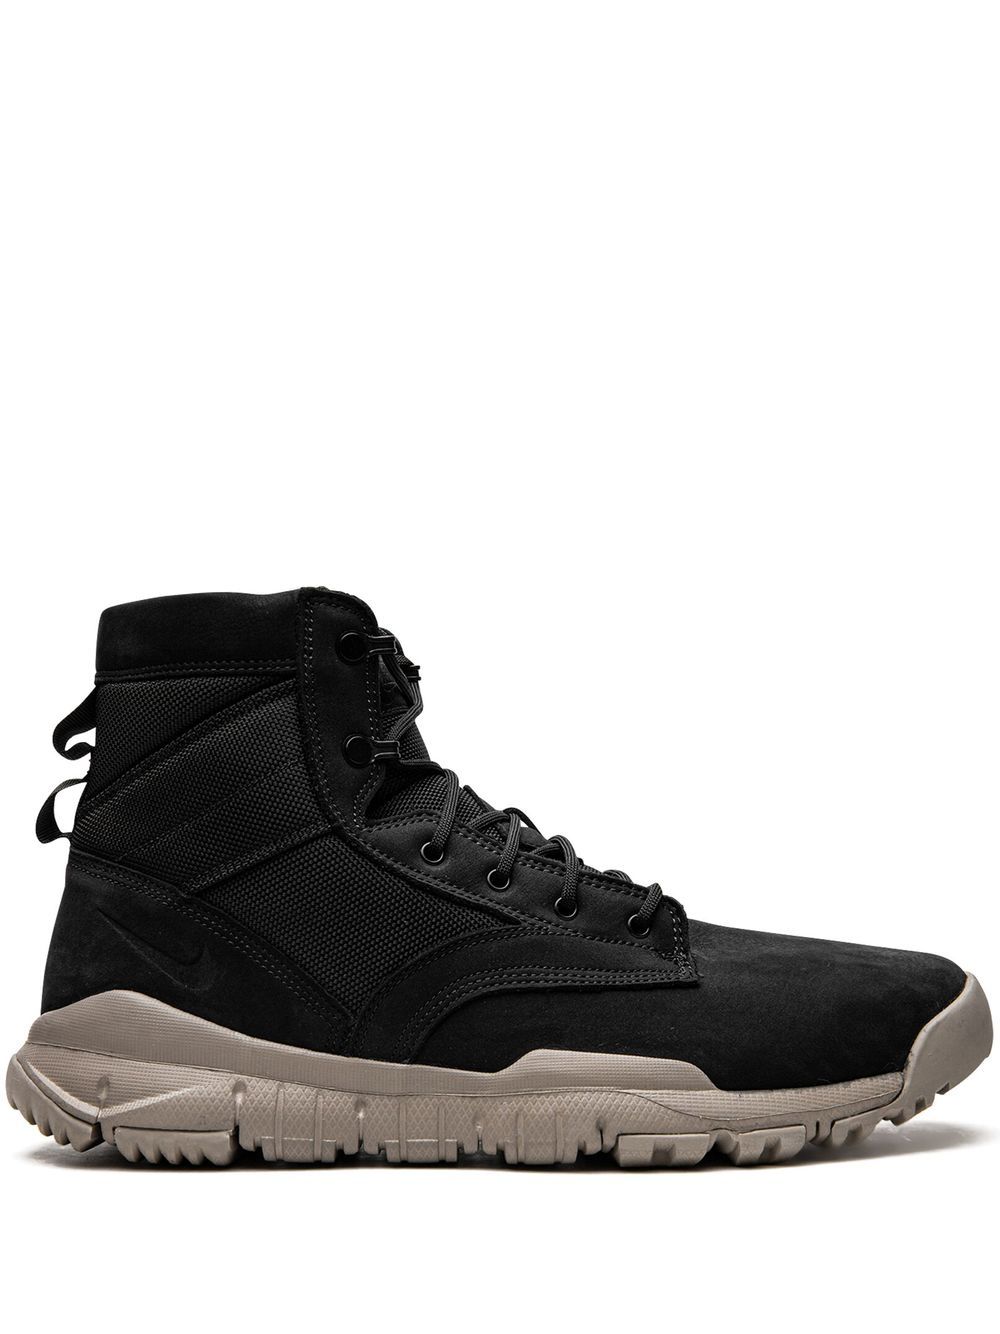 Nike SFB 6-Inch NSW leather boots - Black von Nike